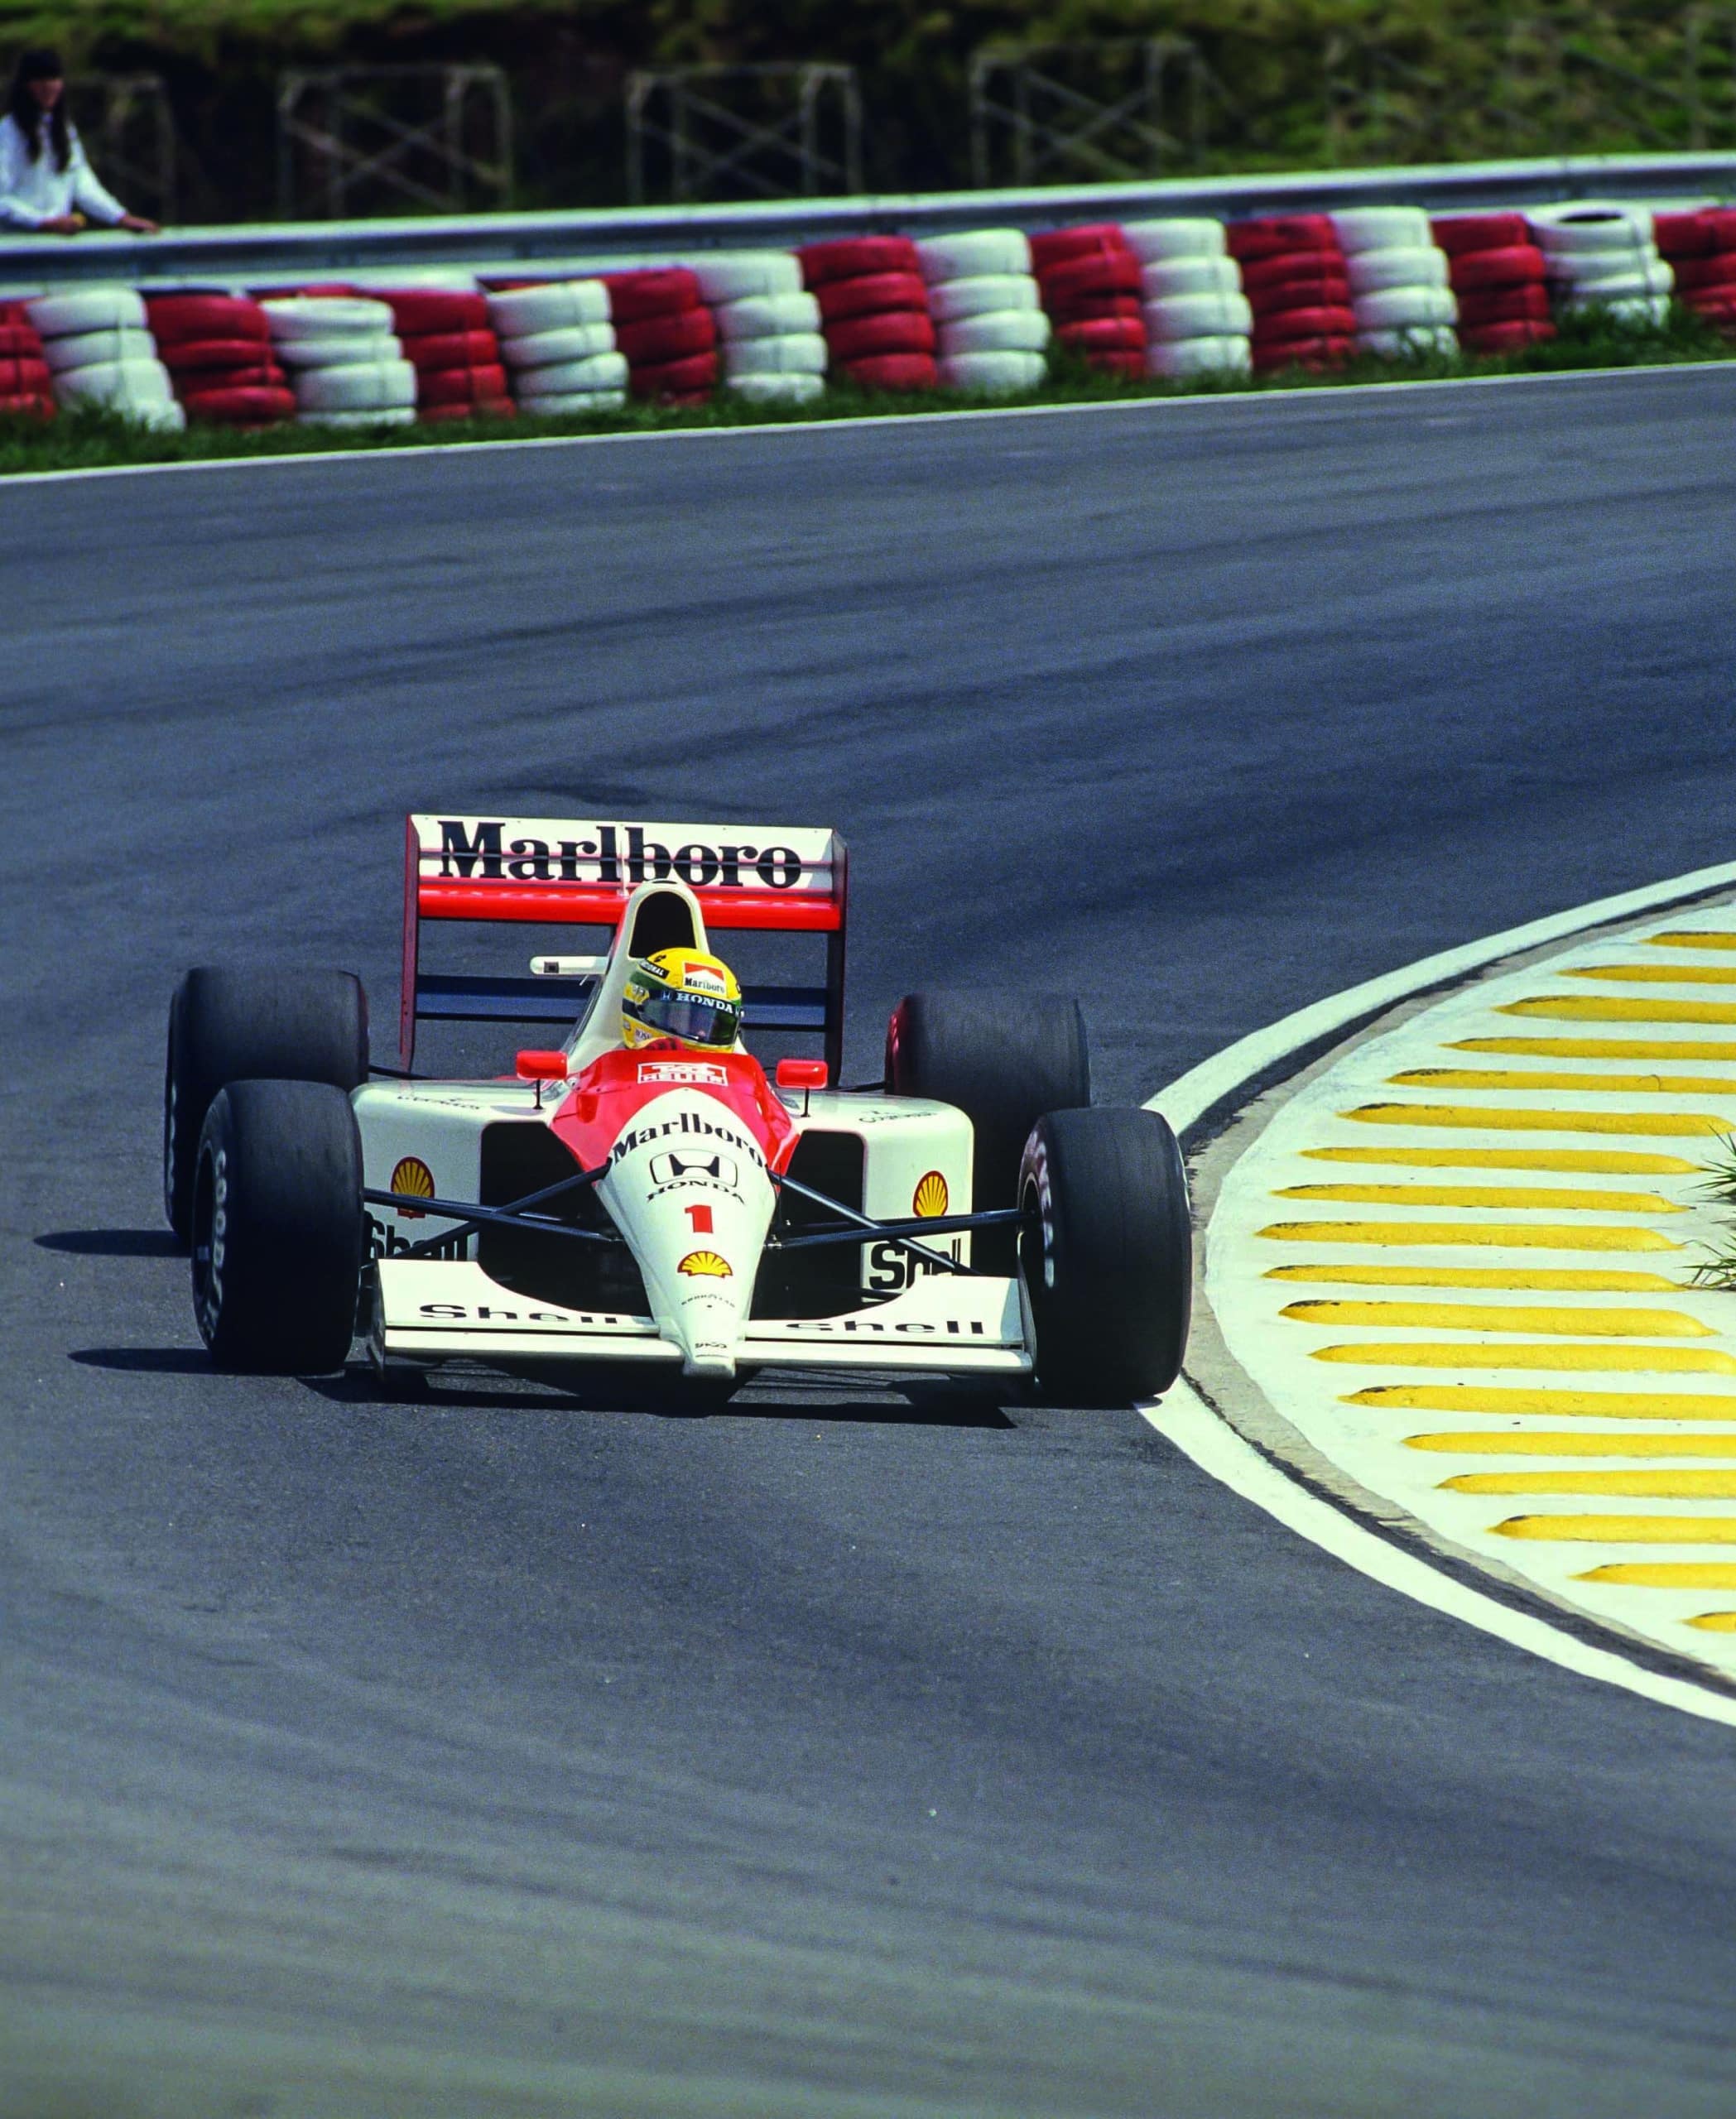 Ayrton Senna in his McLaren at Interlagos, driving to victory in the 1991 Brazilian Grand Prix